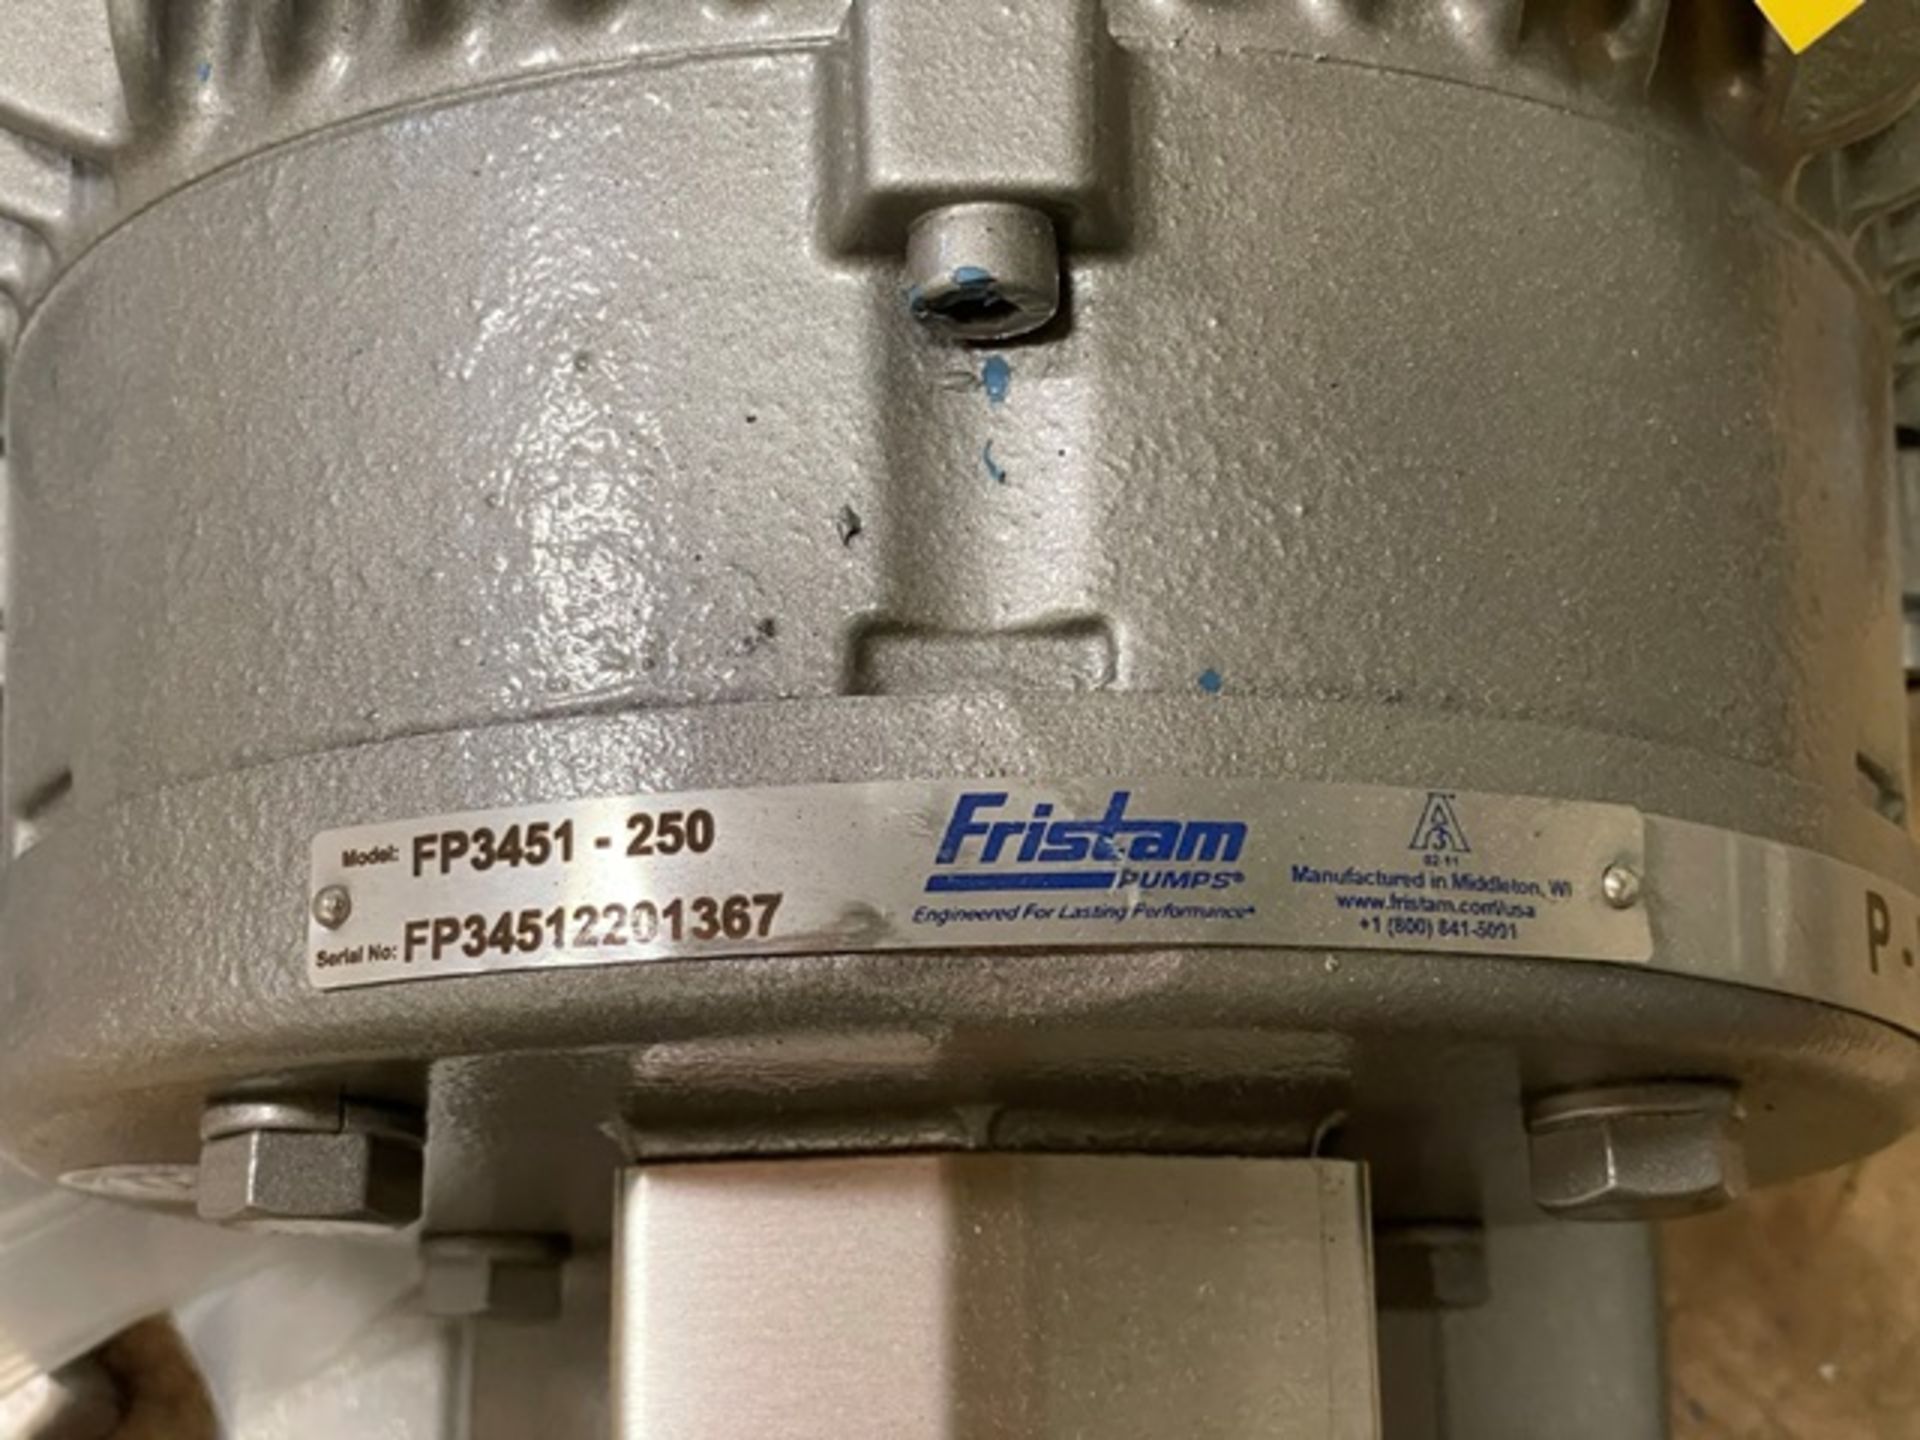 Fristam 75 HP Motor & Model FP3451-250 Pump, Rigging & Loading Fee: $125 - Image 2 of 2